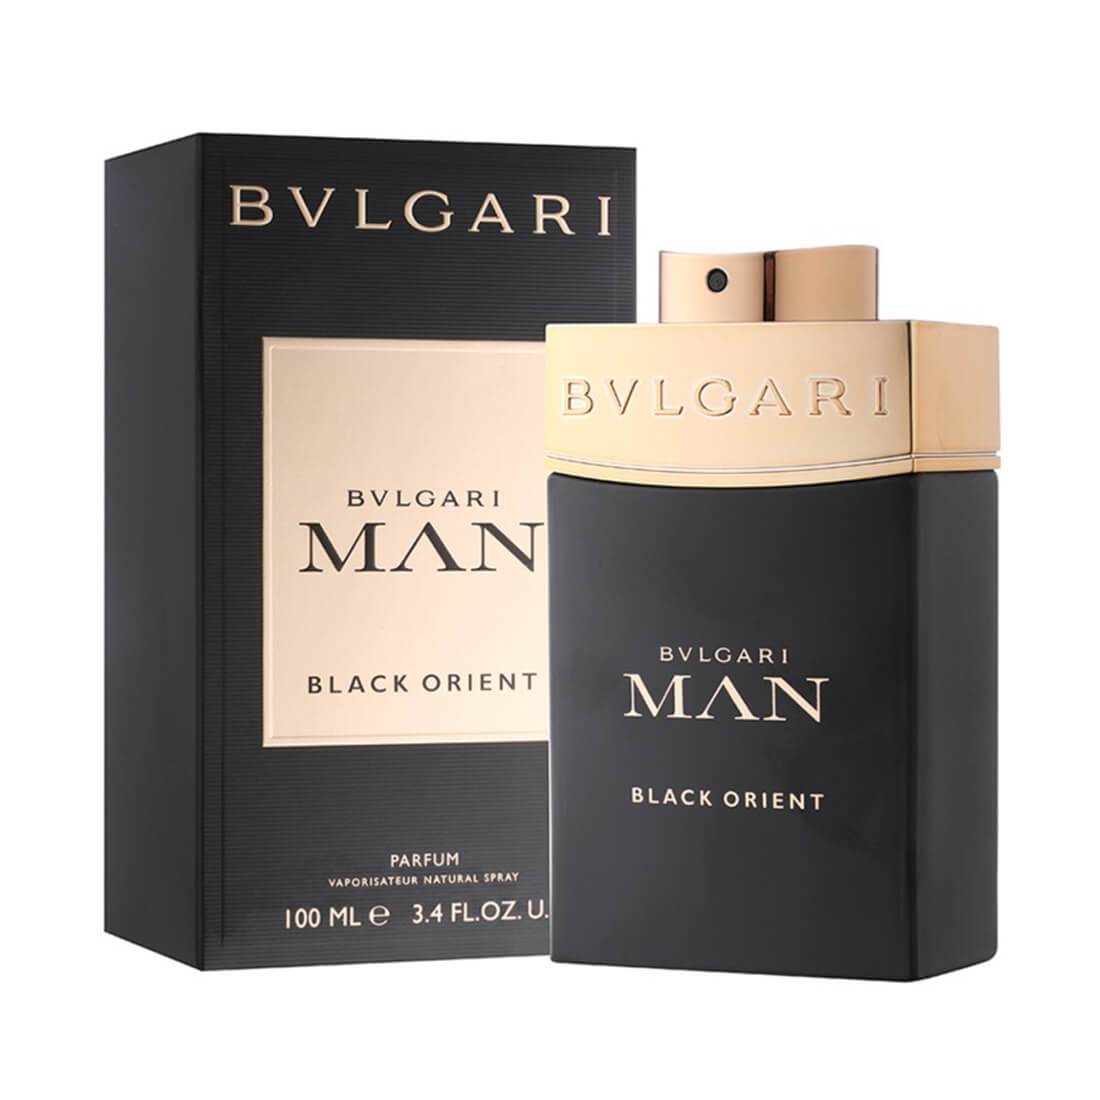 bvlgari man black orient review